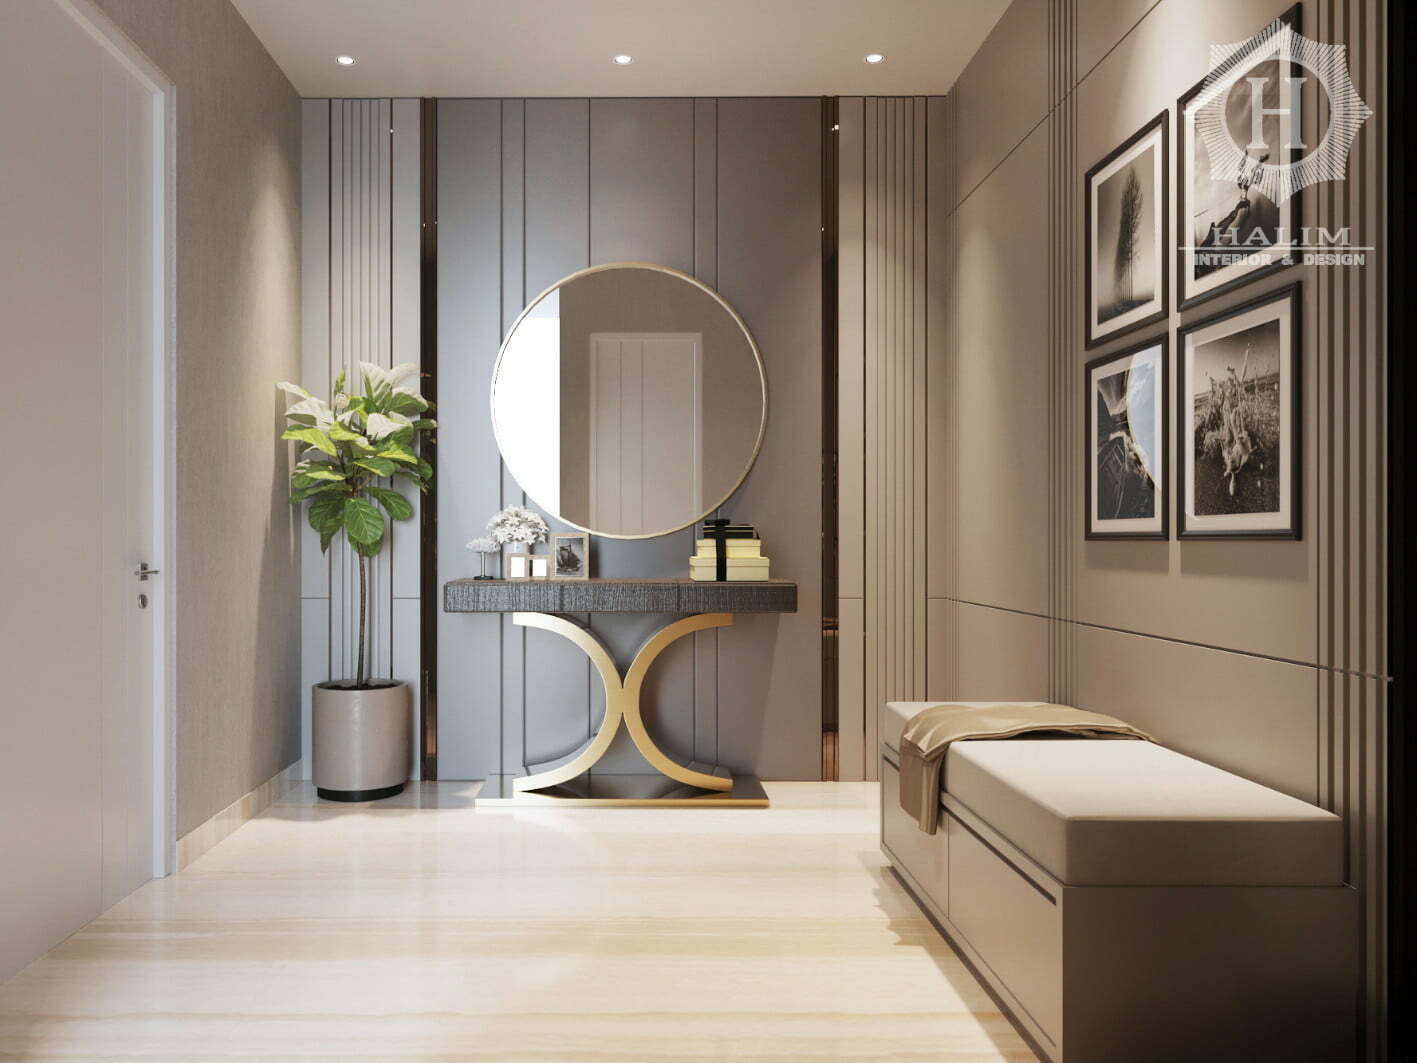 Halim Interior modern furniture contemporer american style minimalist european classic surabaya 40.JL . ZEBRA PALU thumb